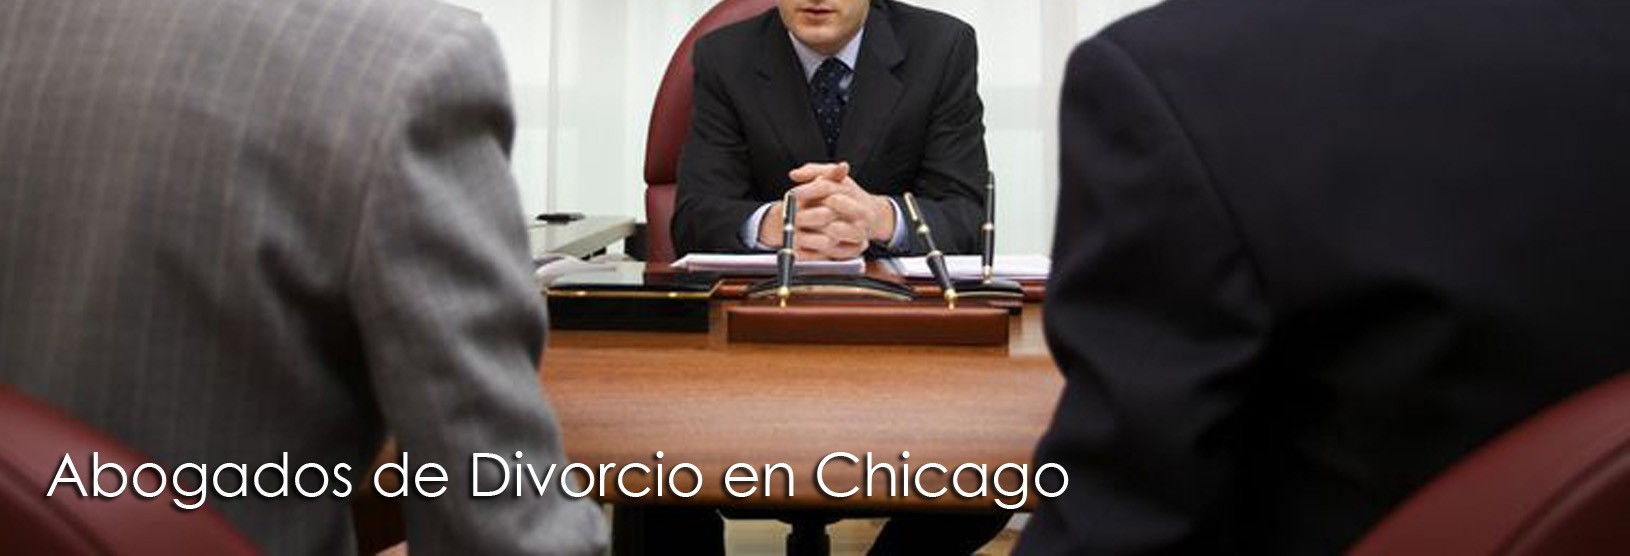 Abogados de Divorcio en Chicago